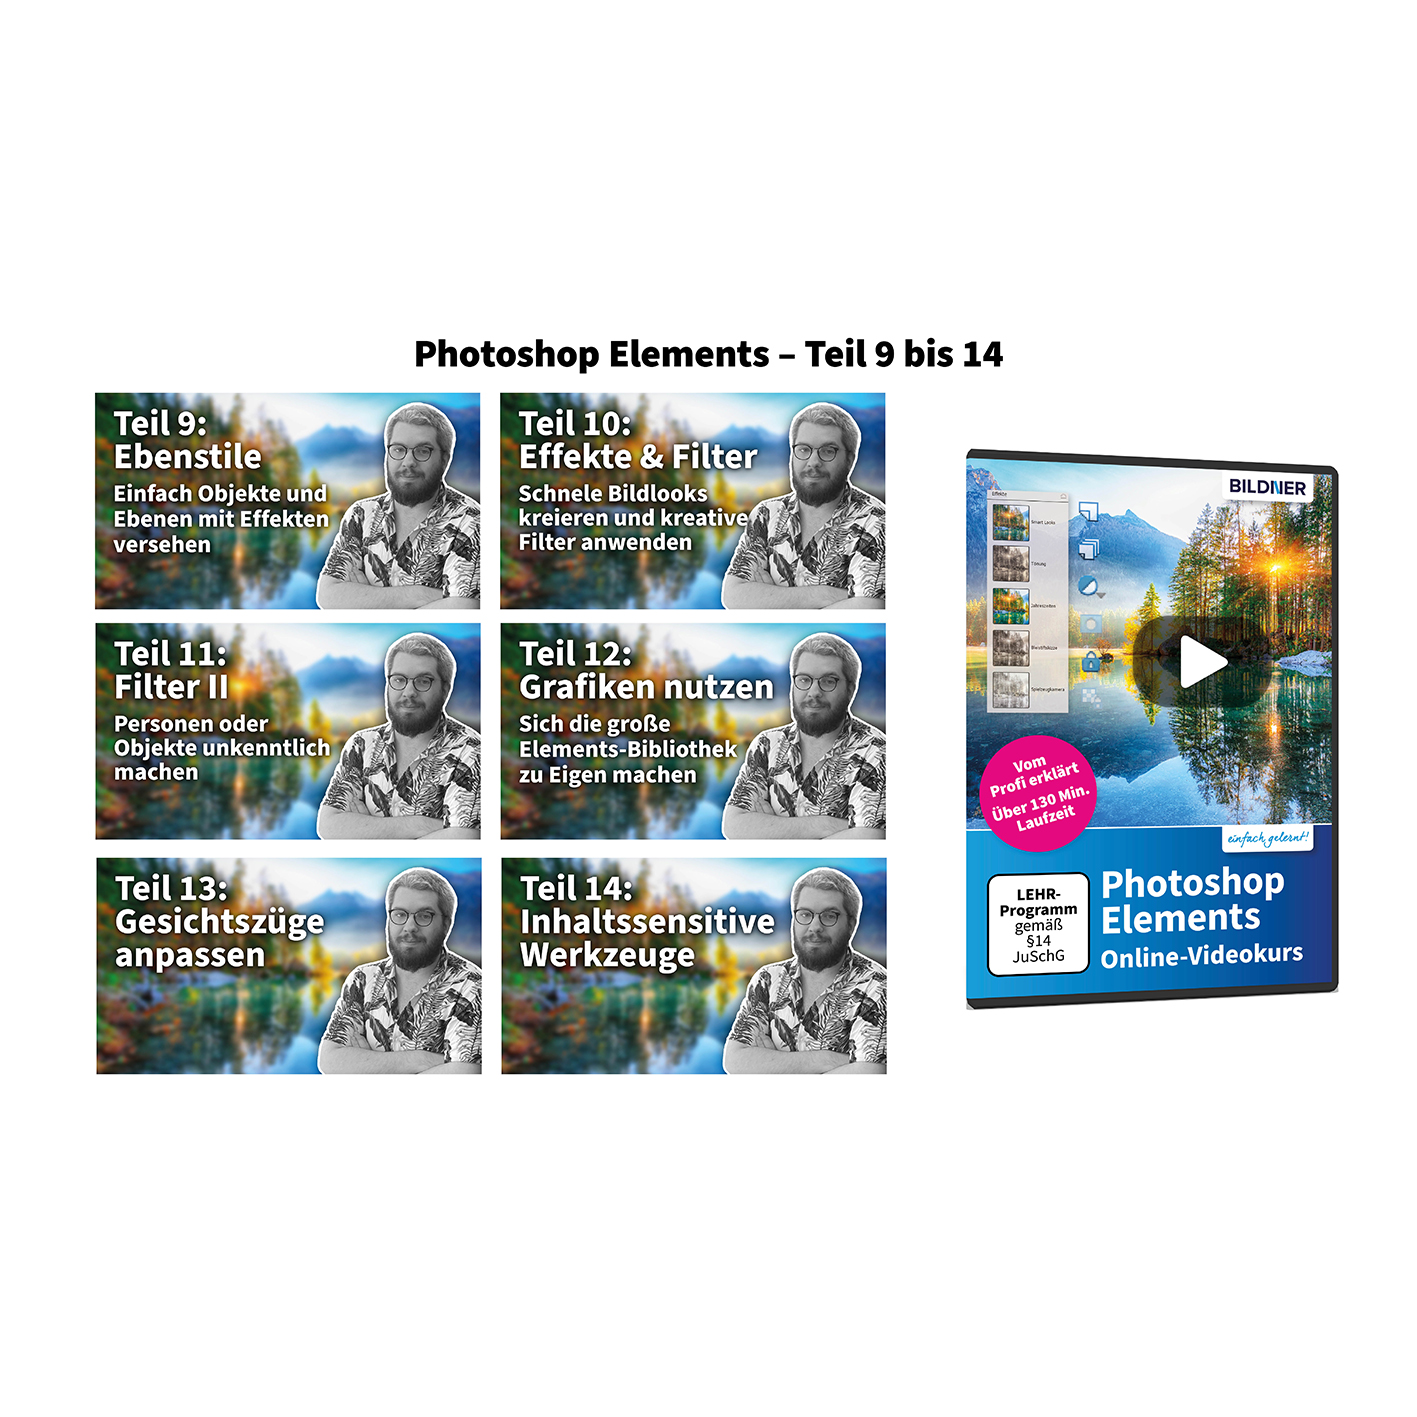 Photoshop Elements Online-Videokurs Product Key Card (PKC)